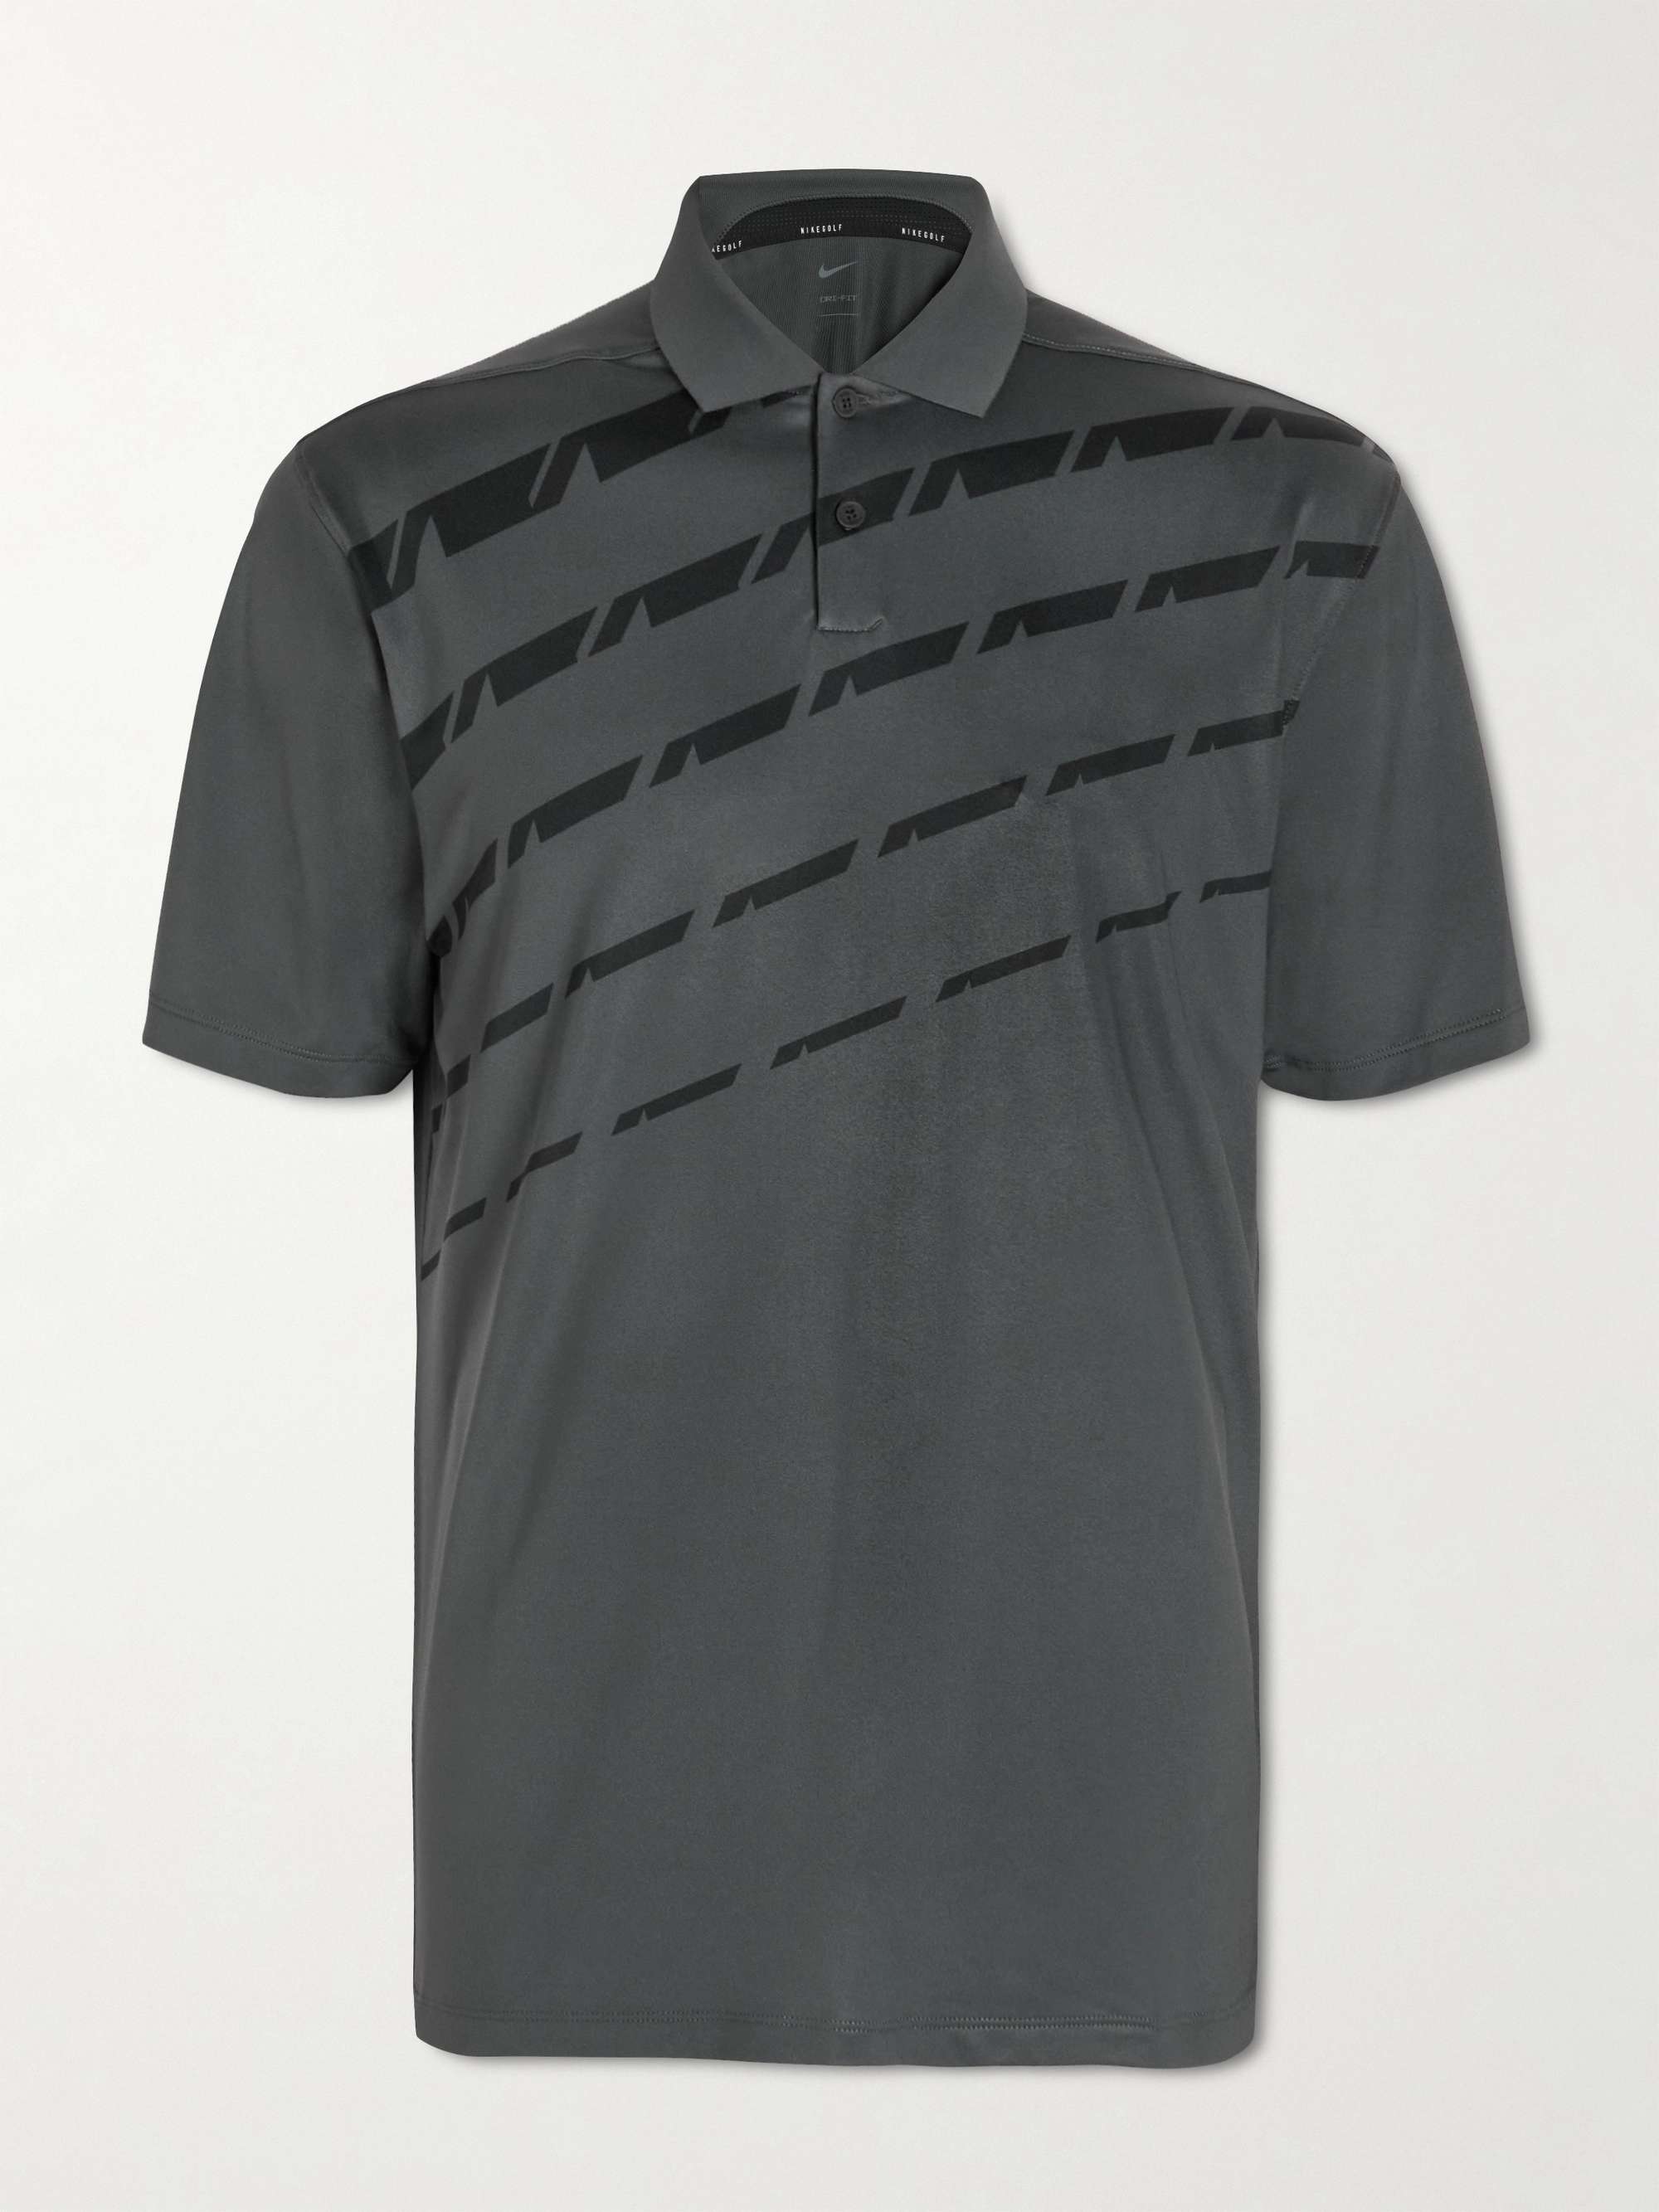 NIKE GOLF Striped Dri-FIT Golf Polo Shirt